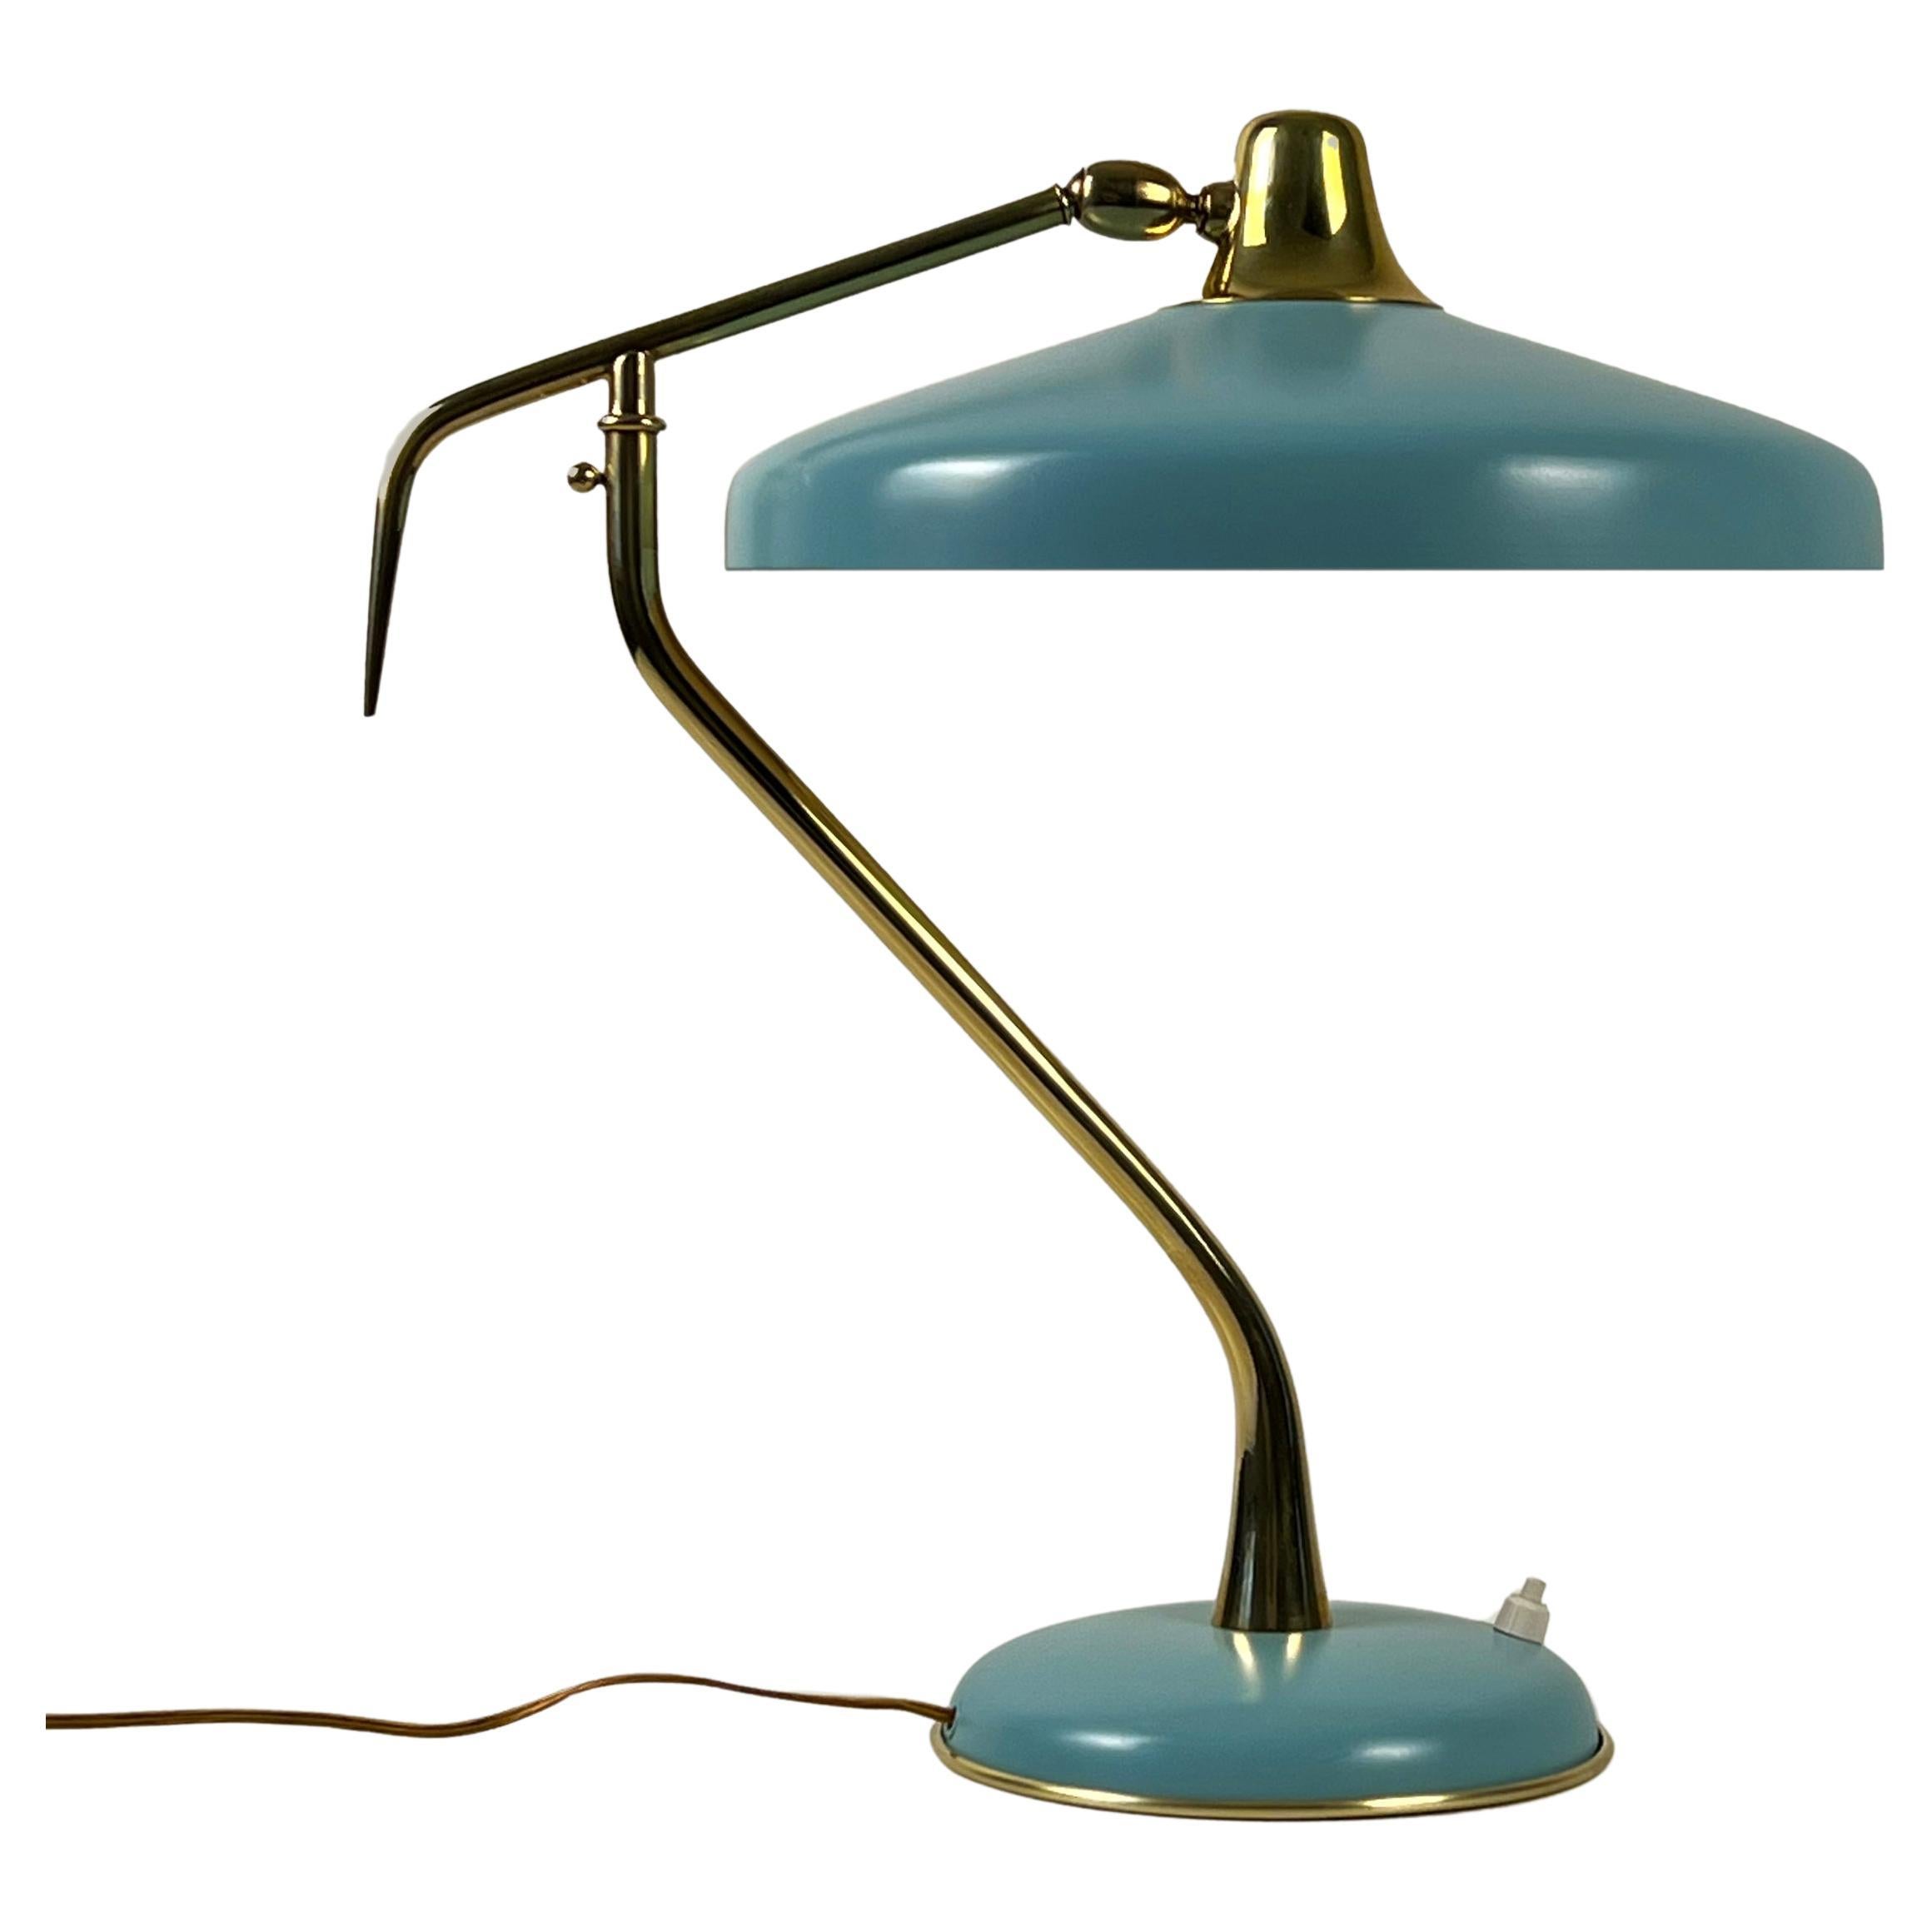 Model 331 table lamp designed by Oscar Torlasco for Lumi Milano, Italy 1950s